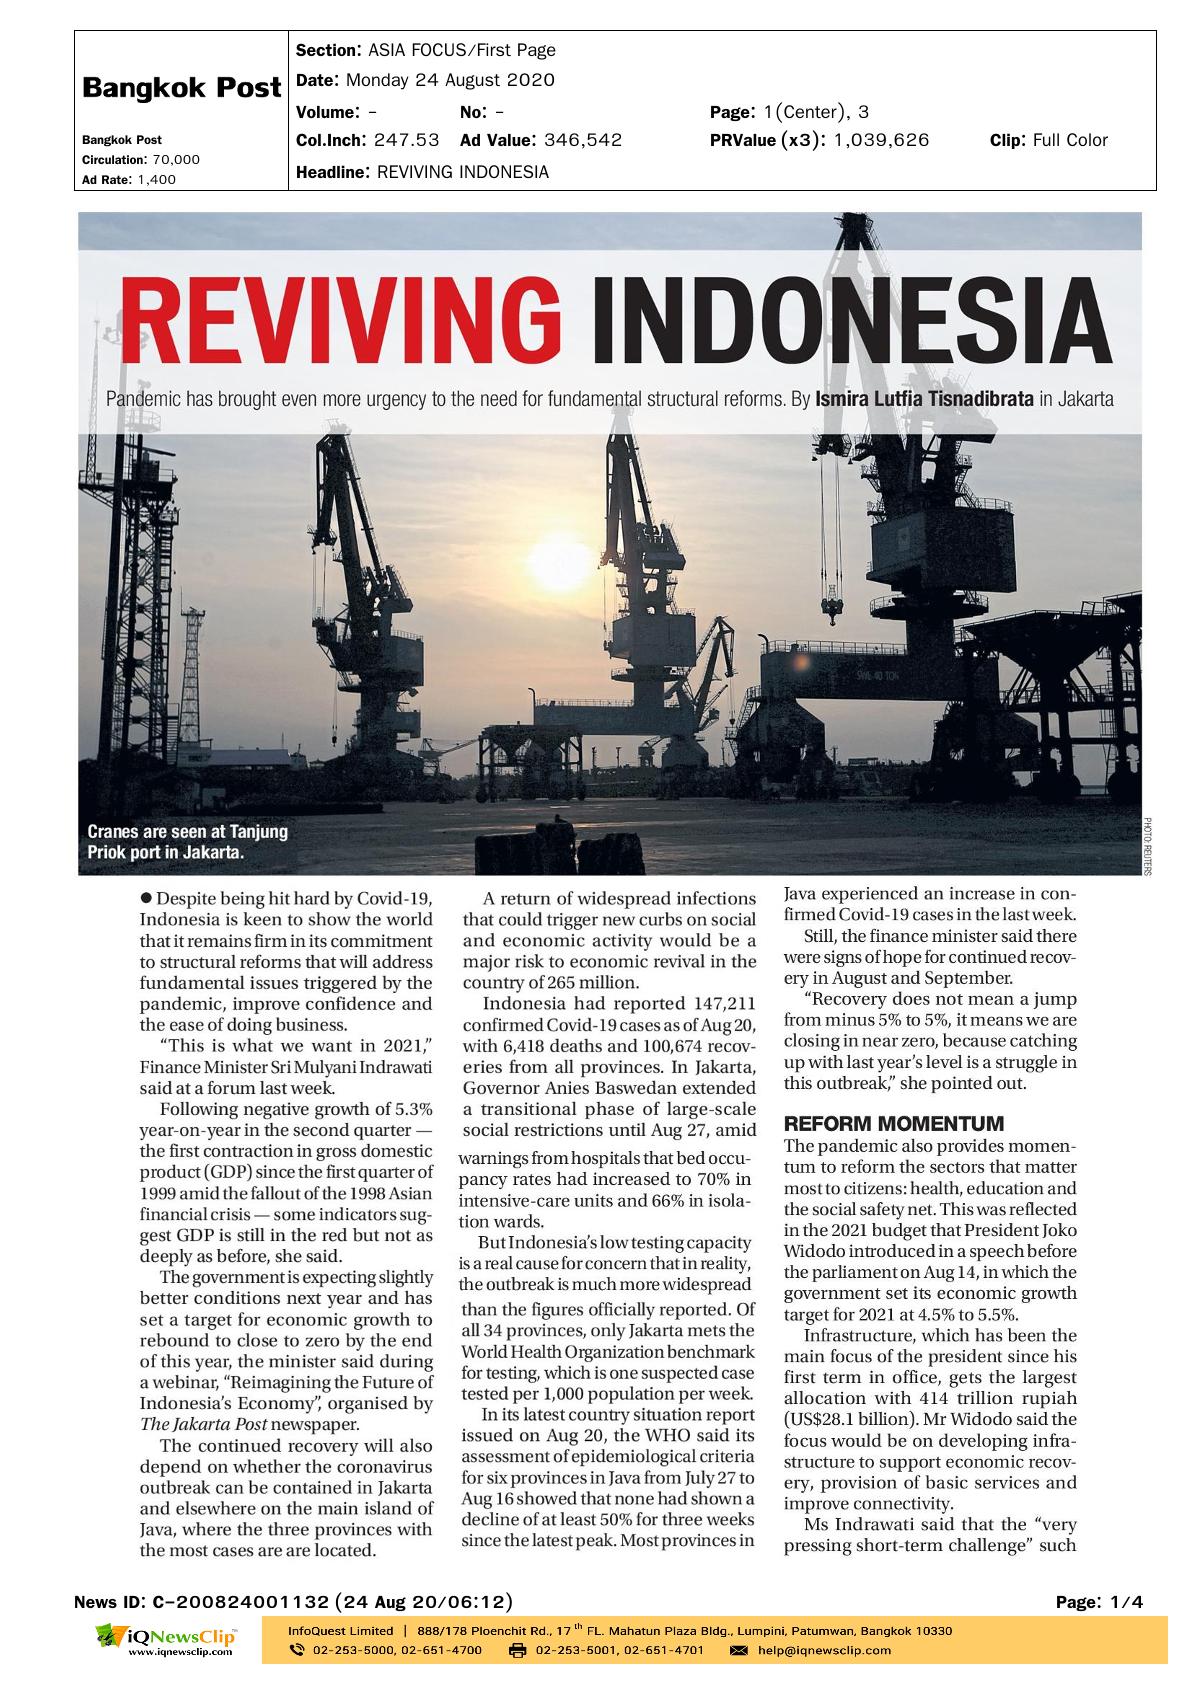 REVIVING INDONESIA